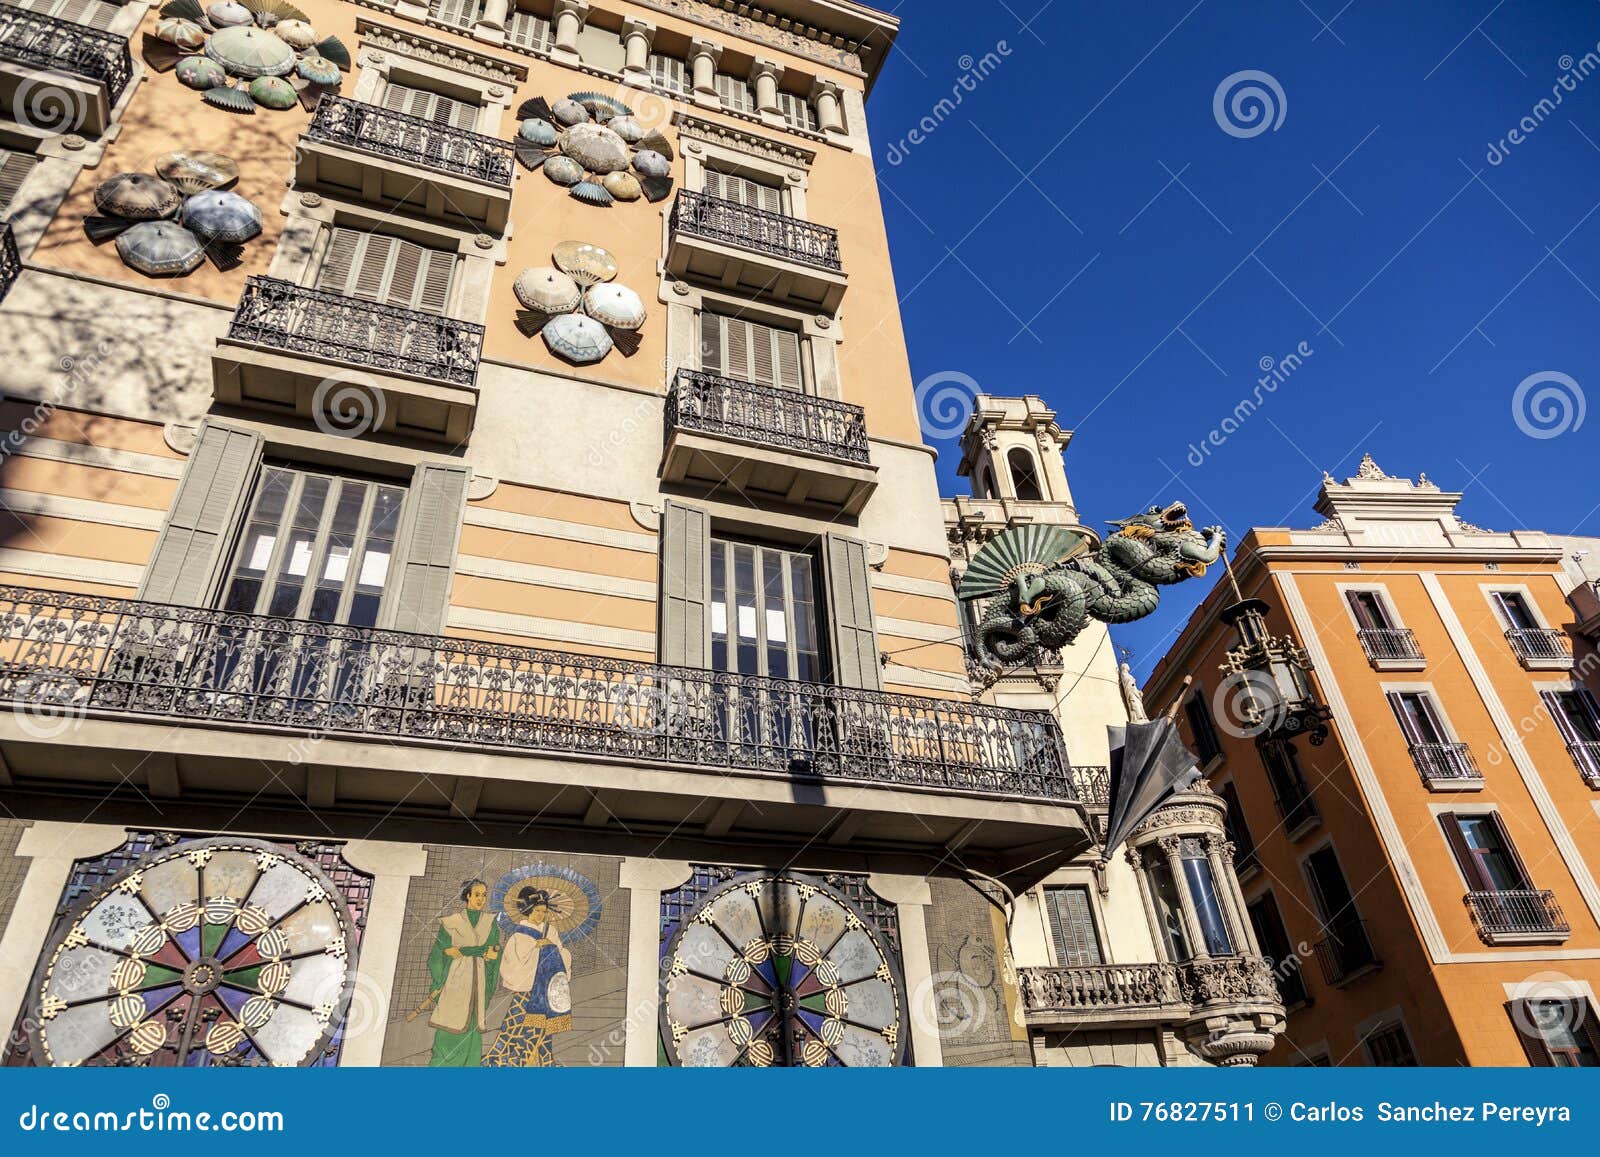 barcelona. chinese dragon on house of umbrellas (casa bruno cuadros) building on la rambla